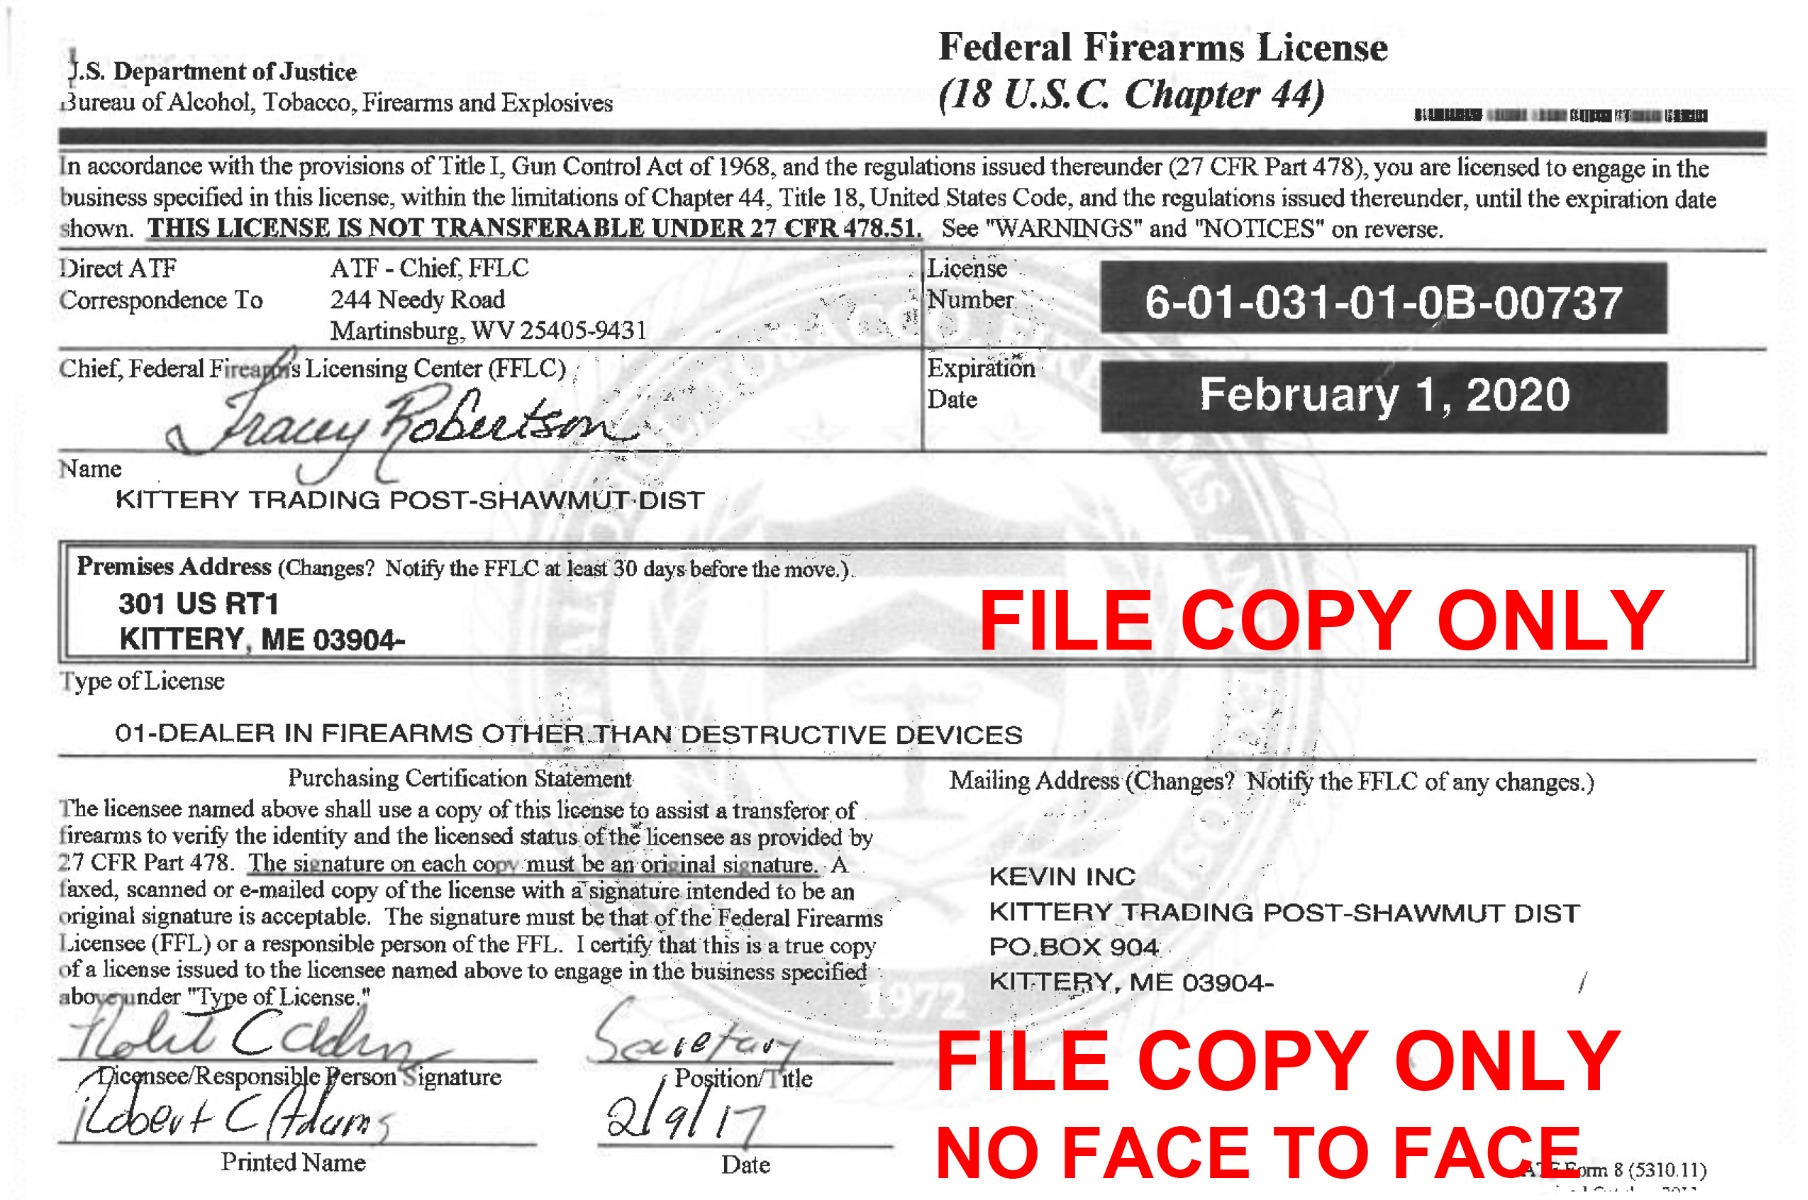 A copy of an FFL license